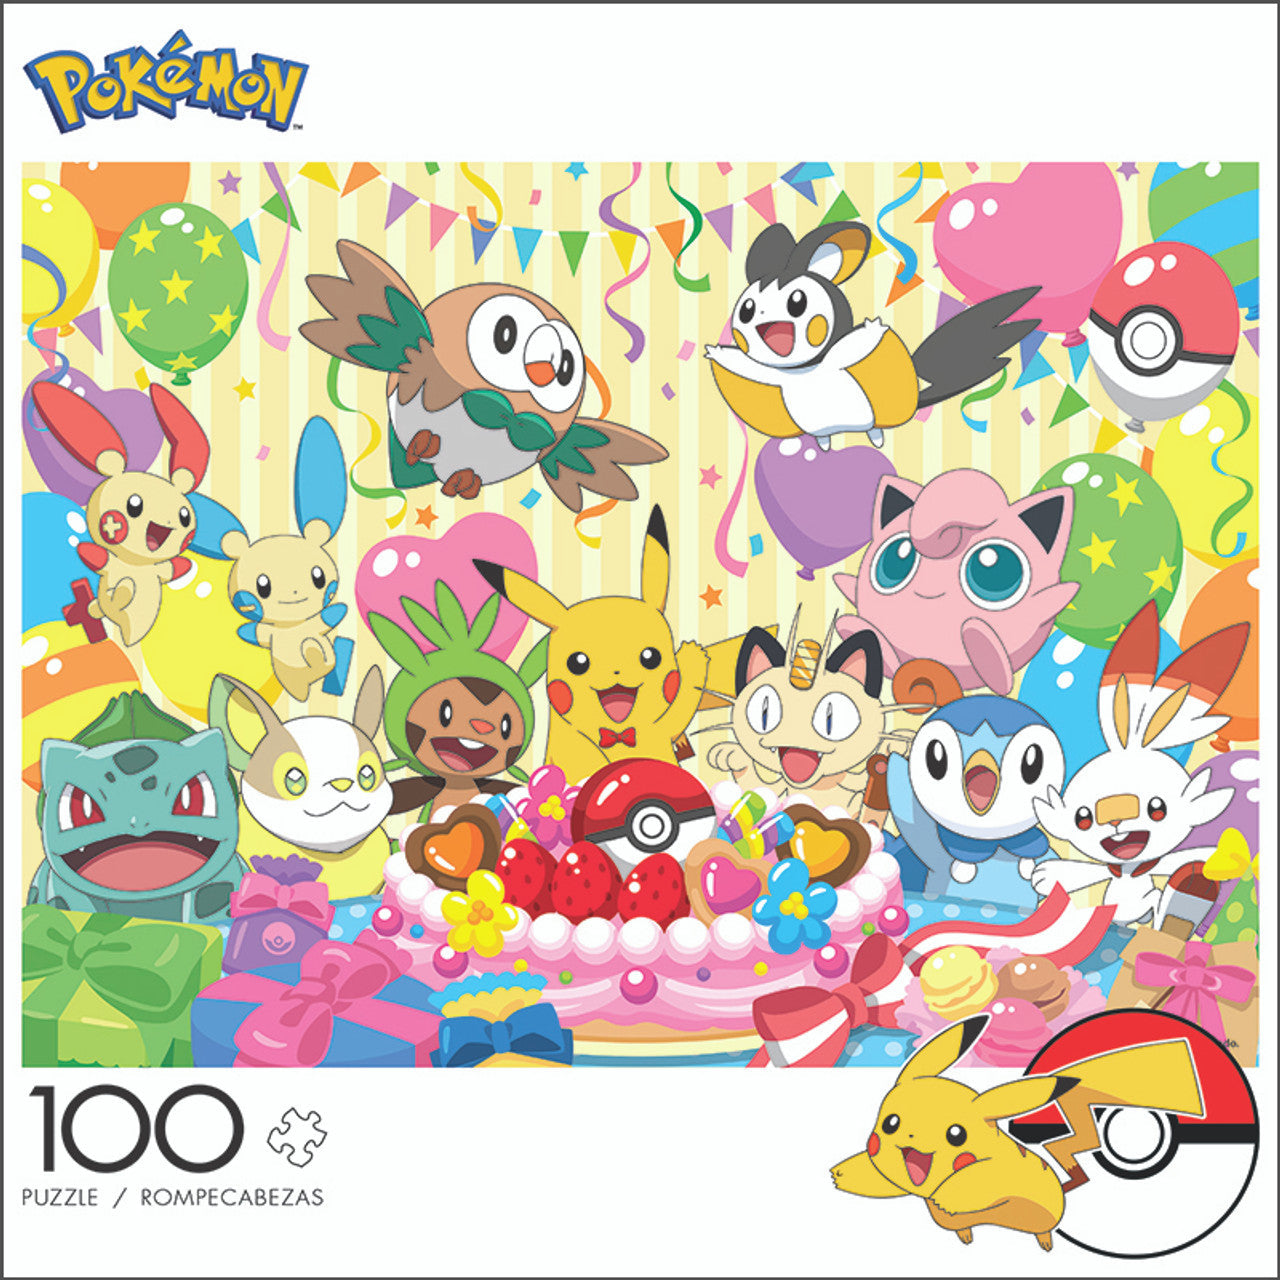 Pokémon Celebration - 100 Piece Puzzle